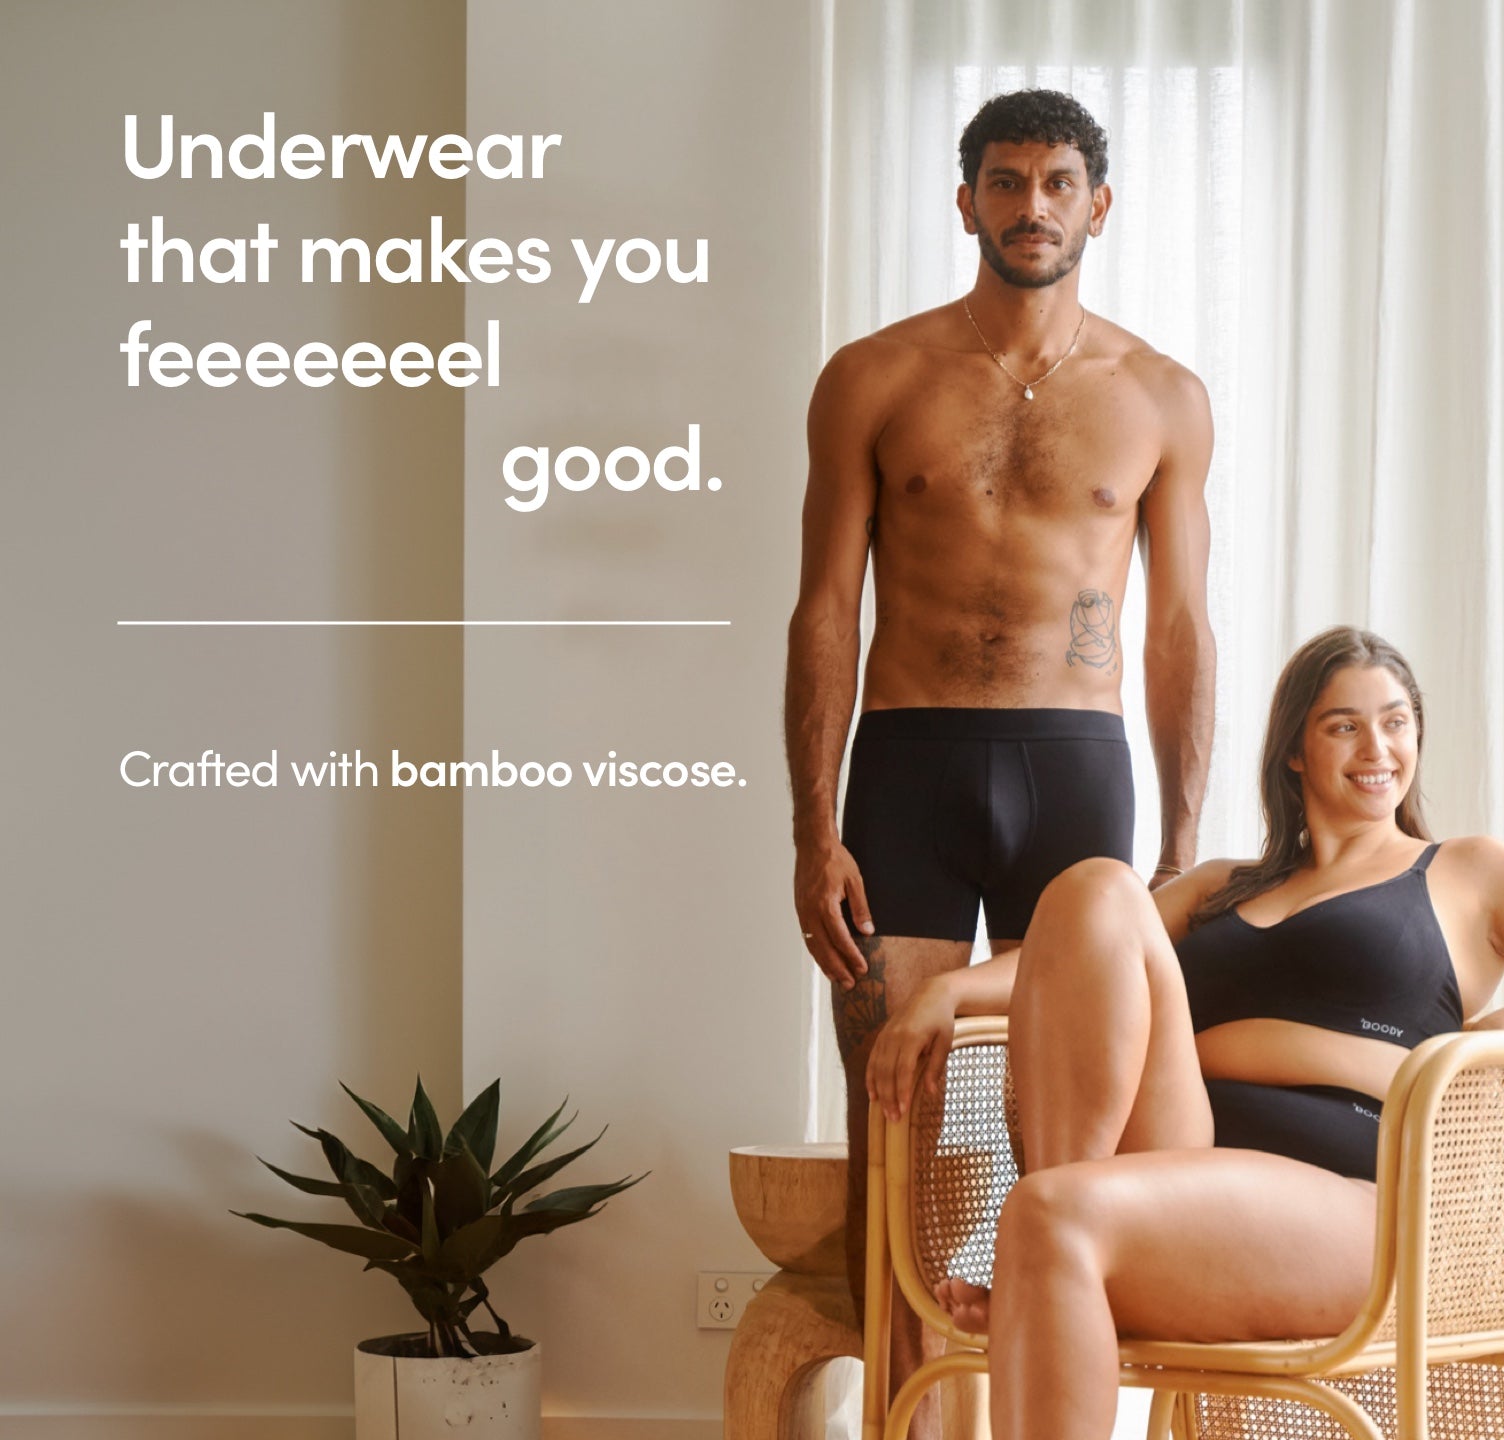 Buy bamboo underwear Australia: Brand beloved by sports stars for